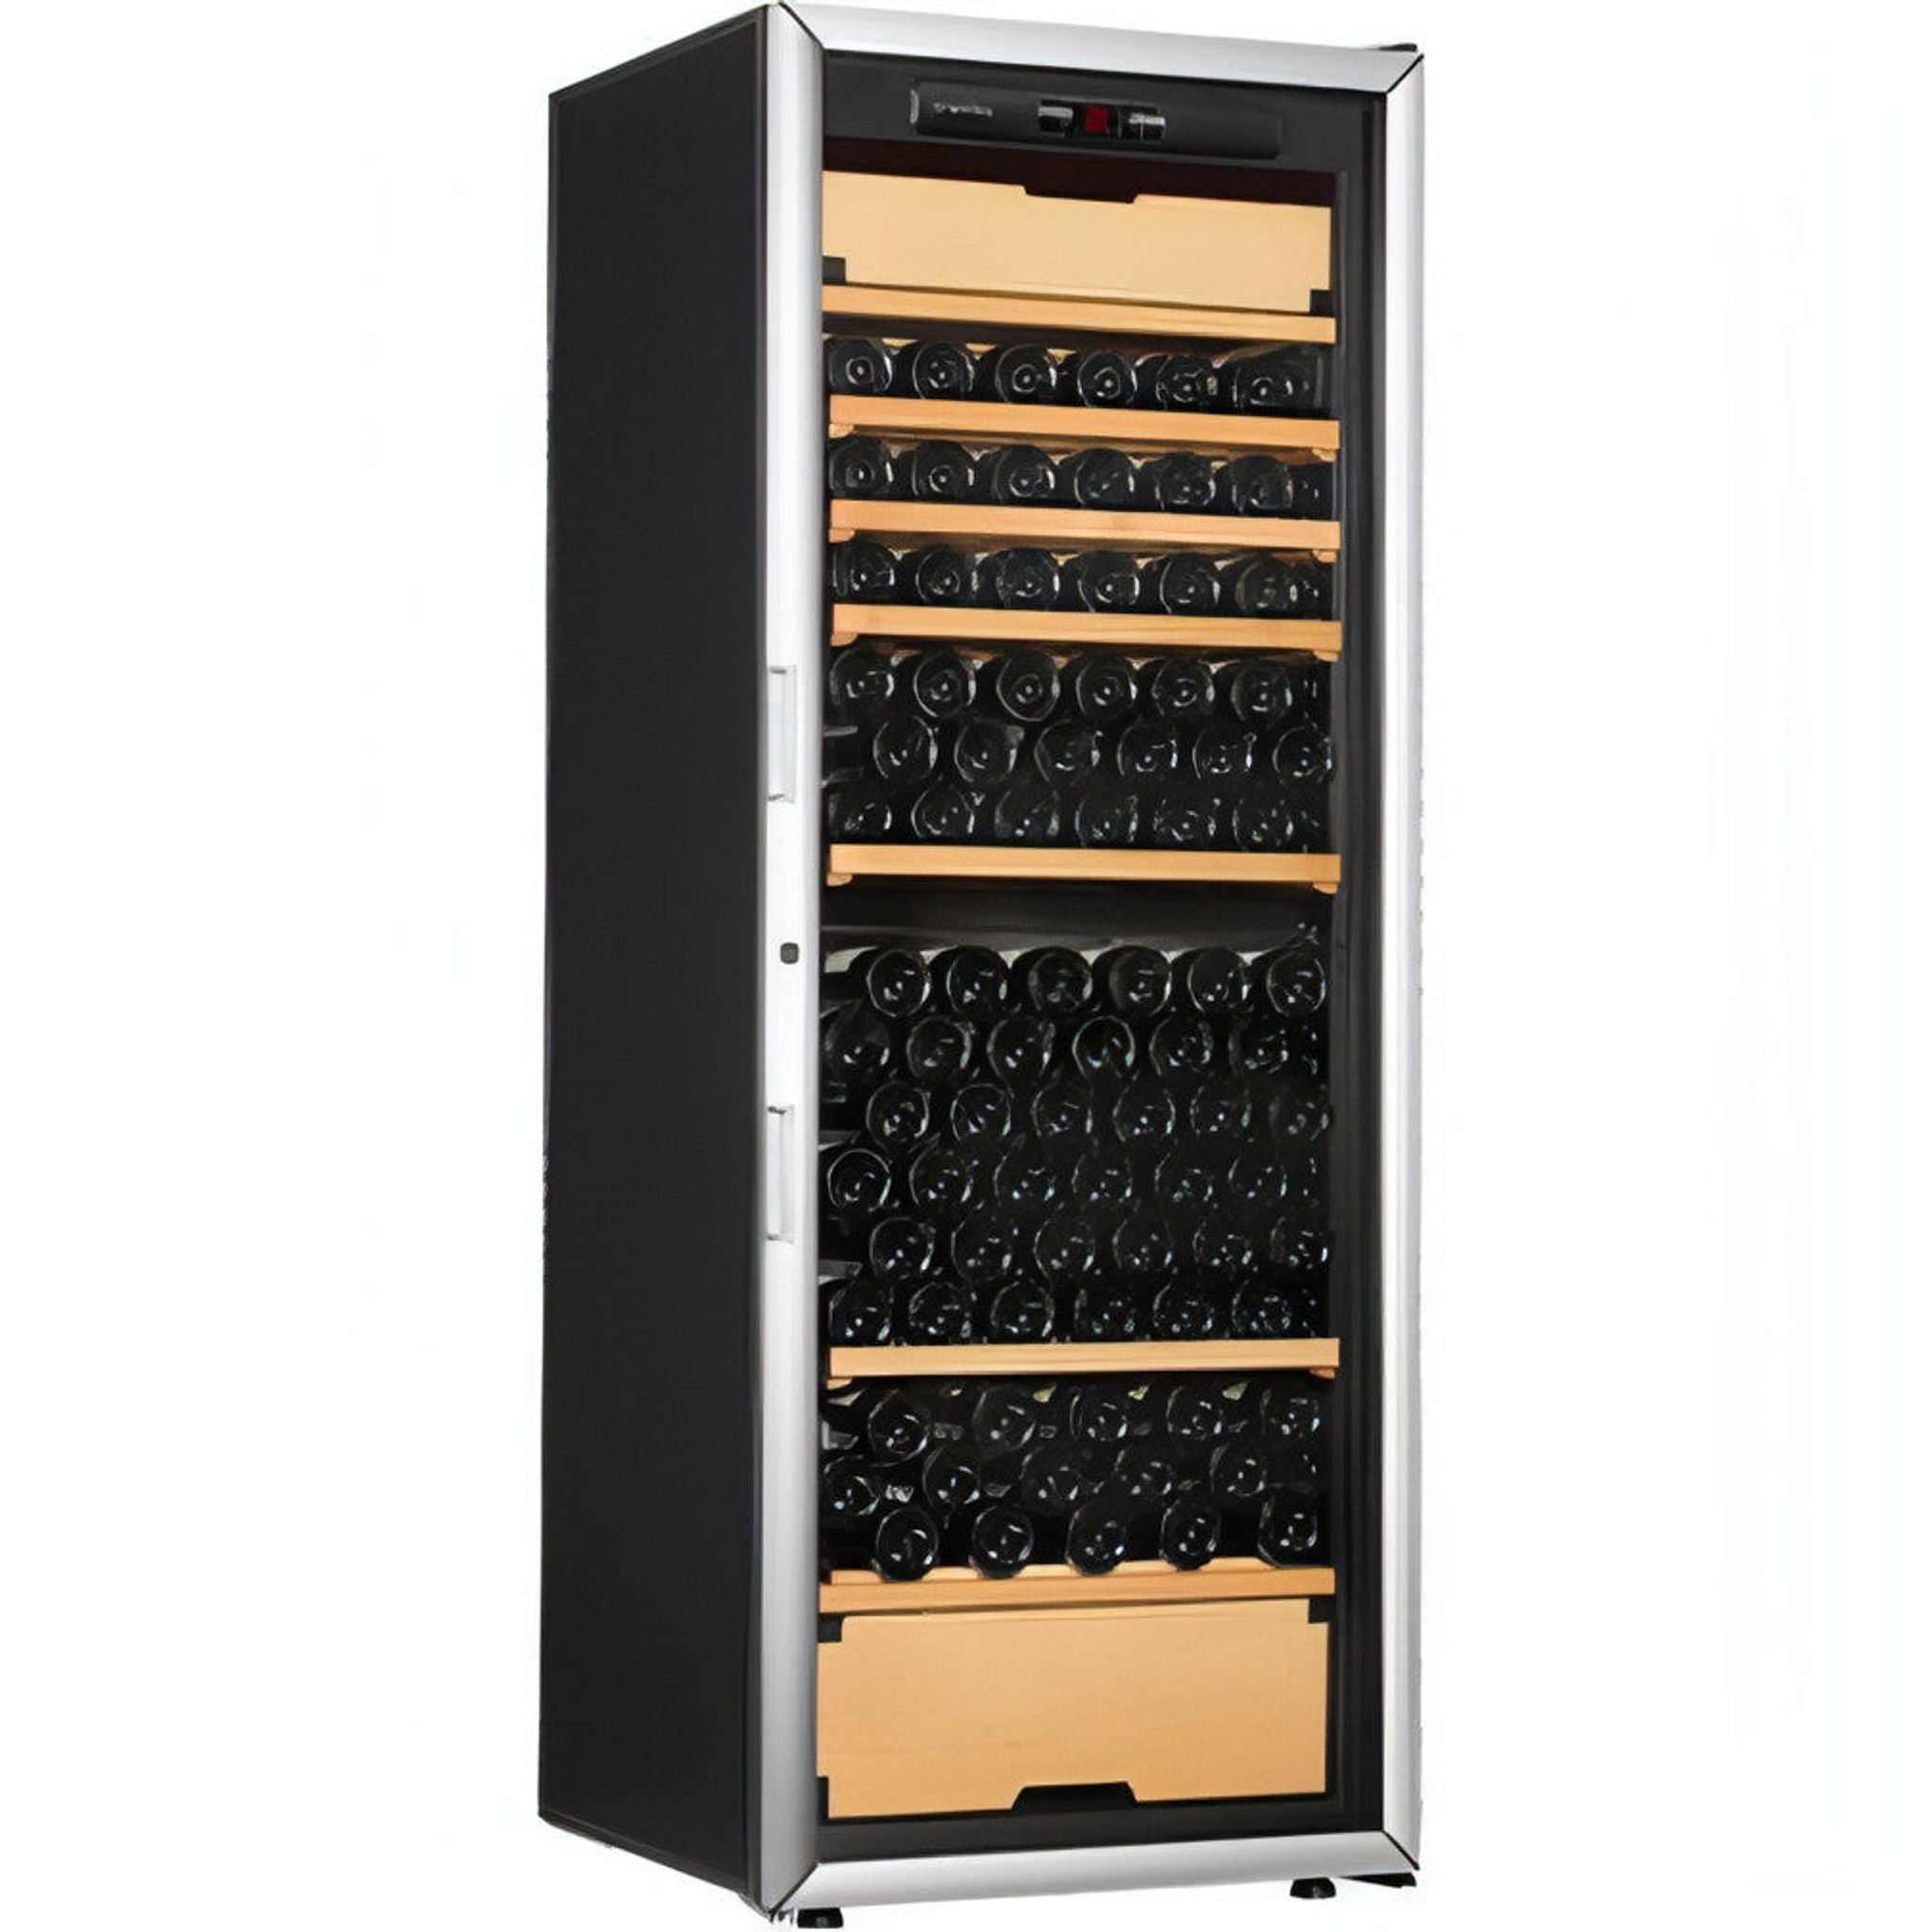 Artevino Oxygen - 199 Bottle Multi Zone Wine Cabinet OXG3T199NVSD - Glass Door